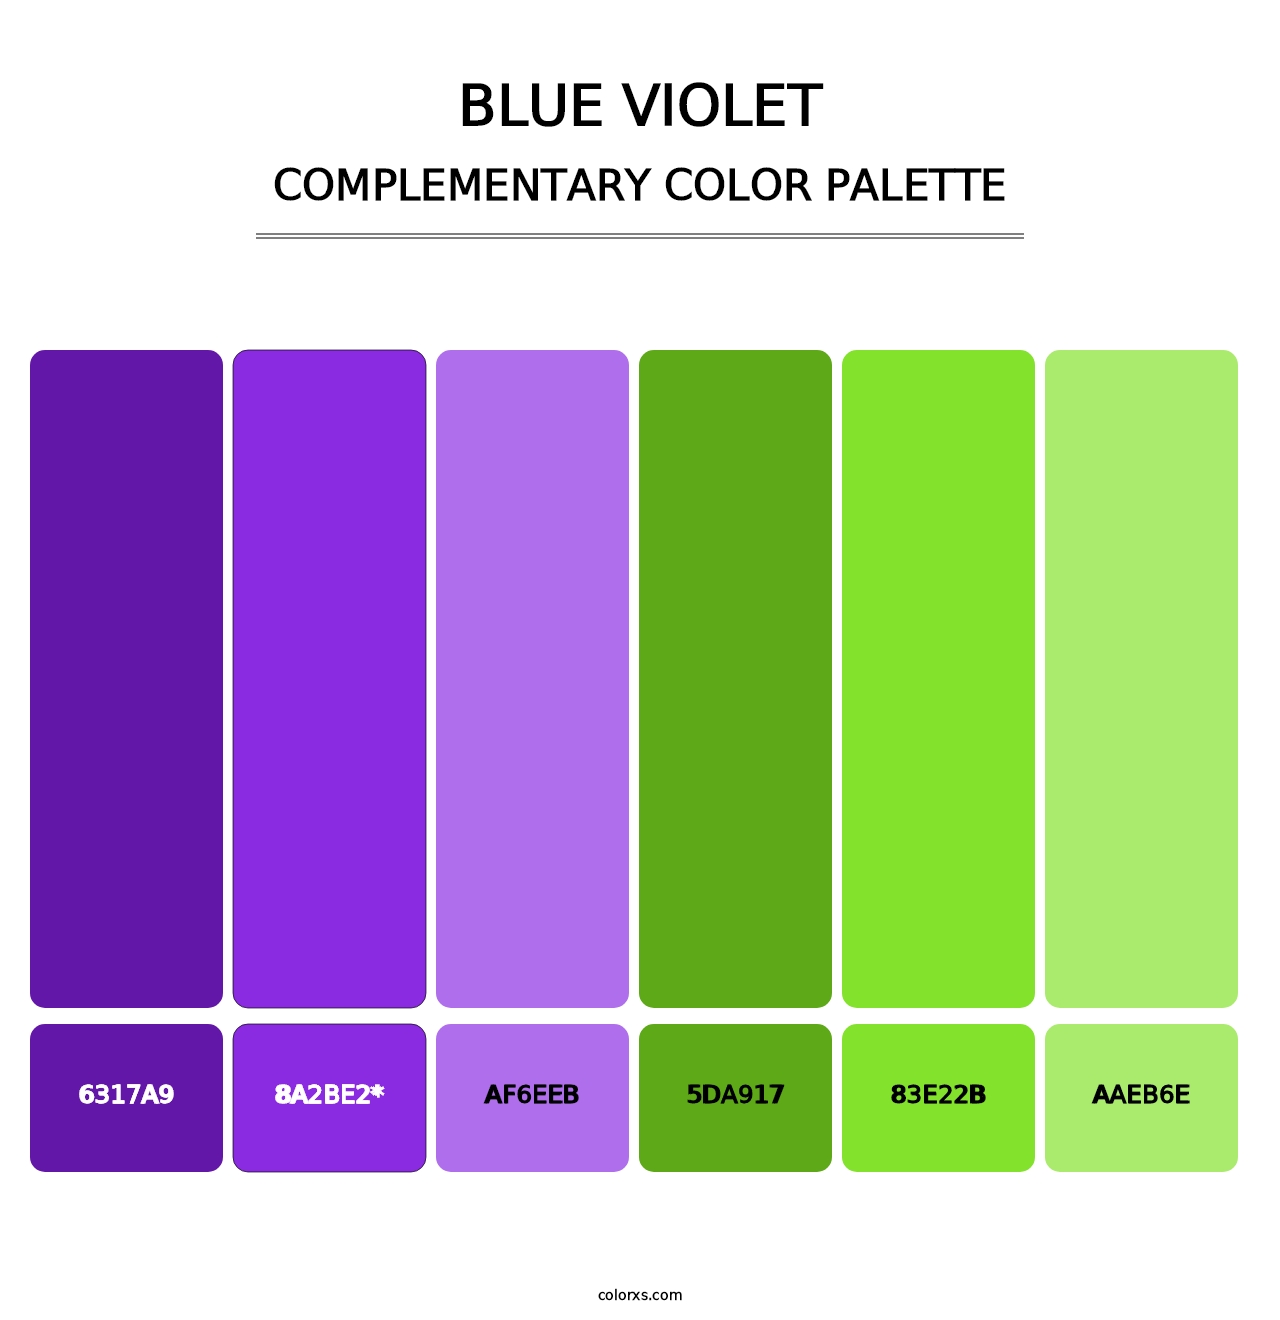 Blue Violet - Complementary Color Palette